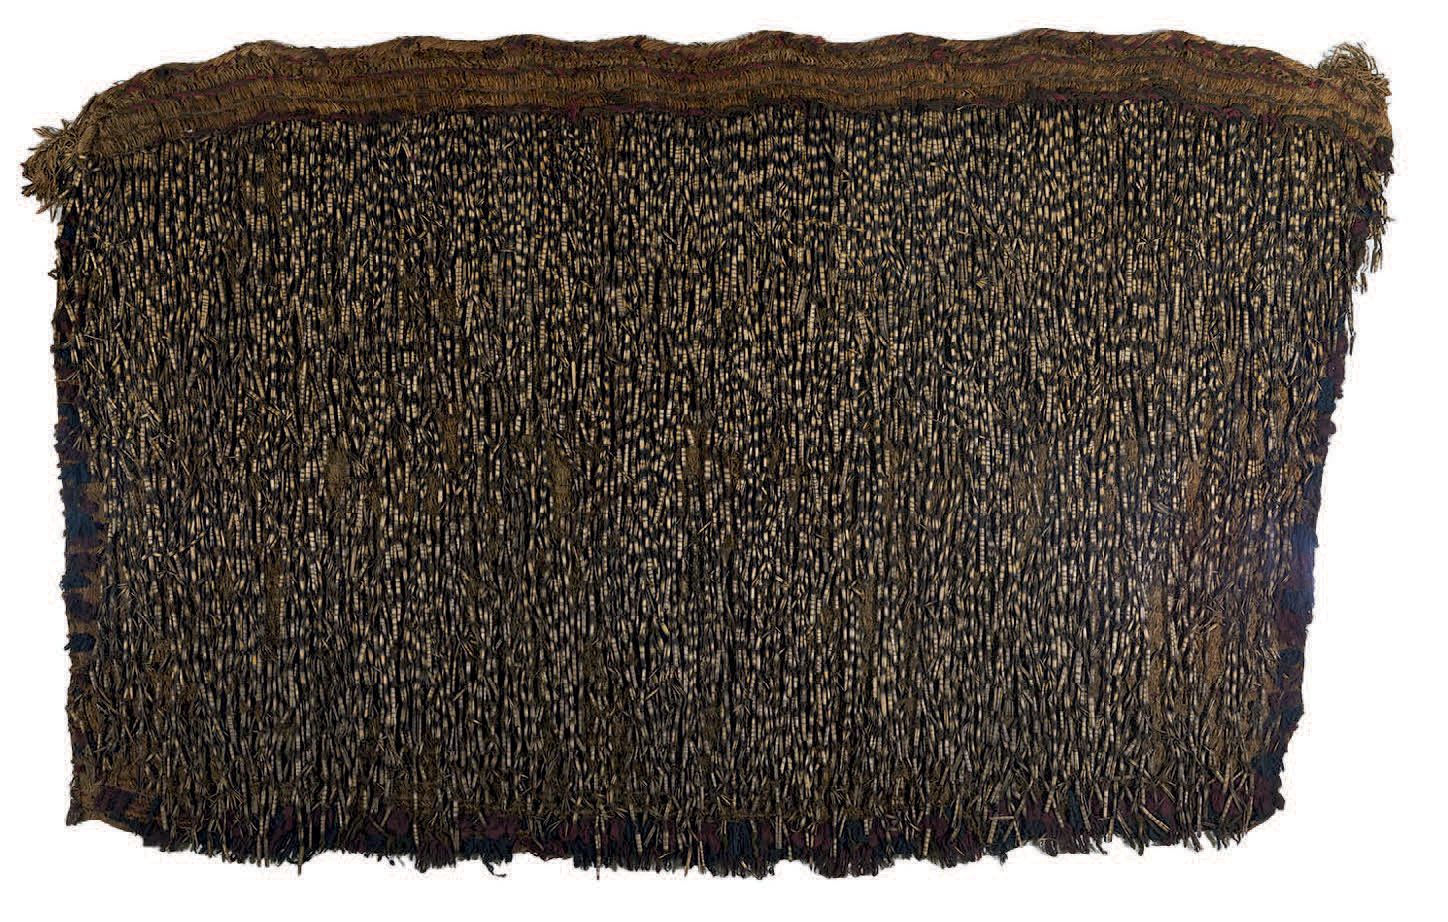 Null Pihepihe毛利斗篷
新西兰 纺织品，植物纤维 高84厘米 - 宽136厘米
出处：
- André Fourquet (1928-2001)，巴&hellip;